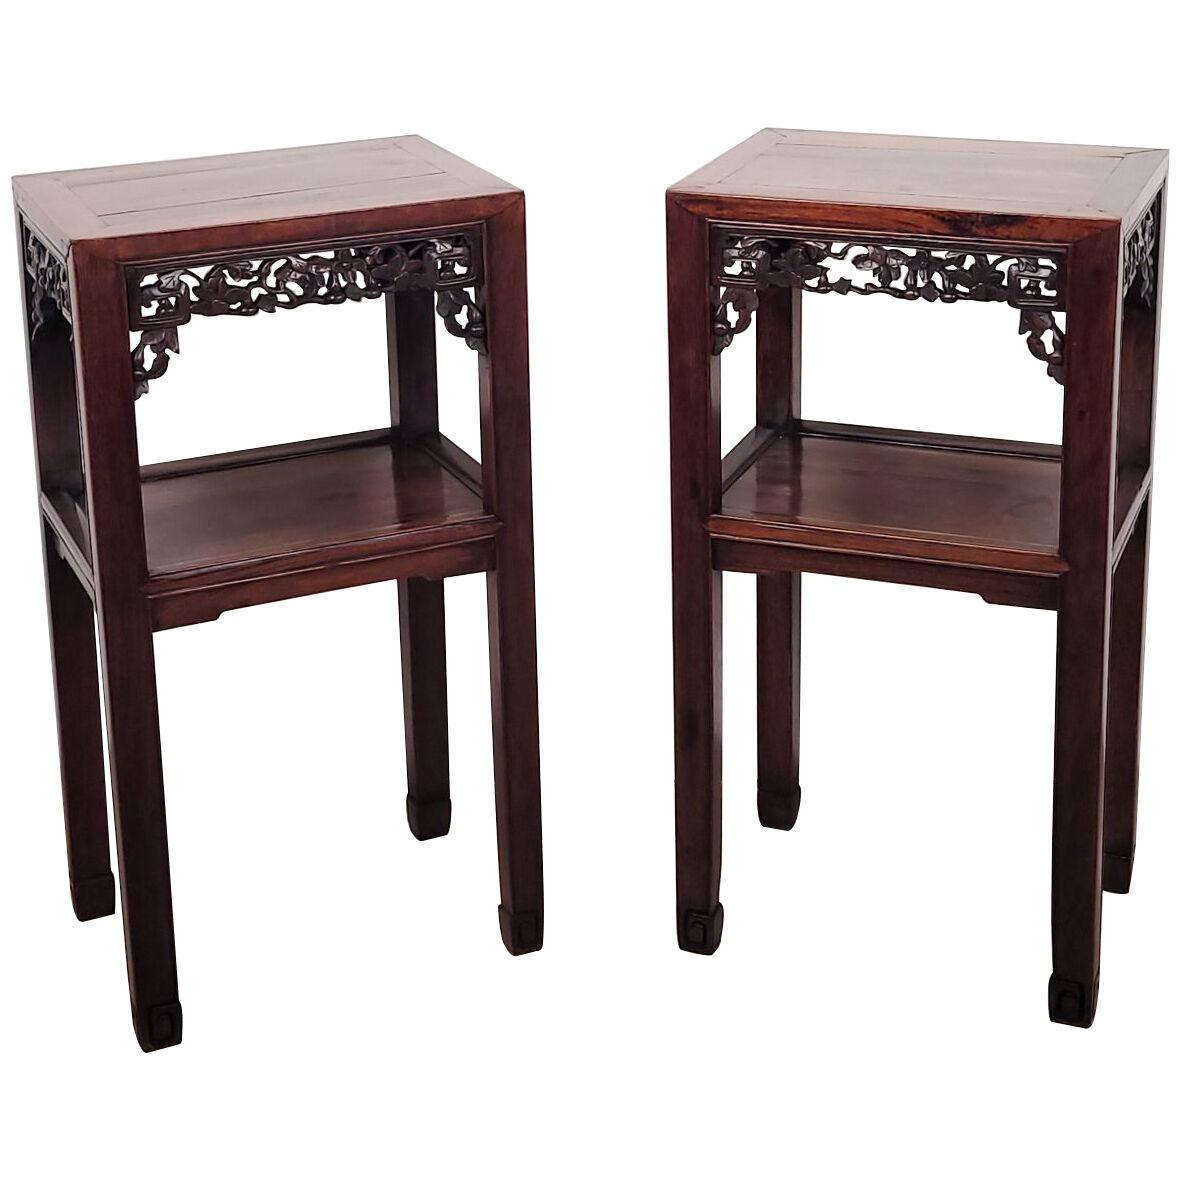 Pair of Chinese Hardwood Tables, circa 1890